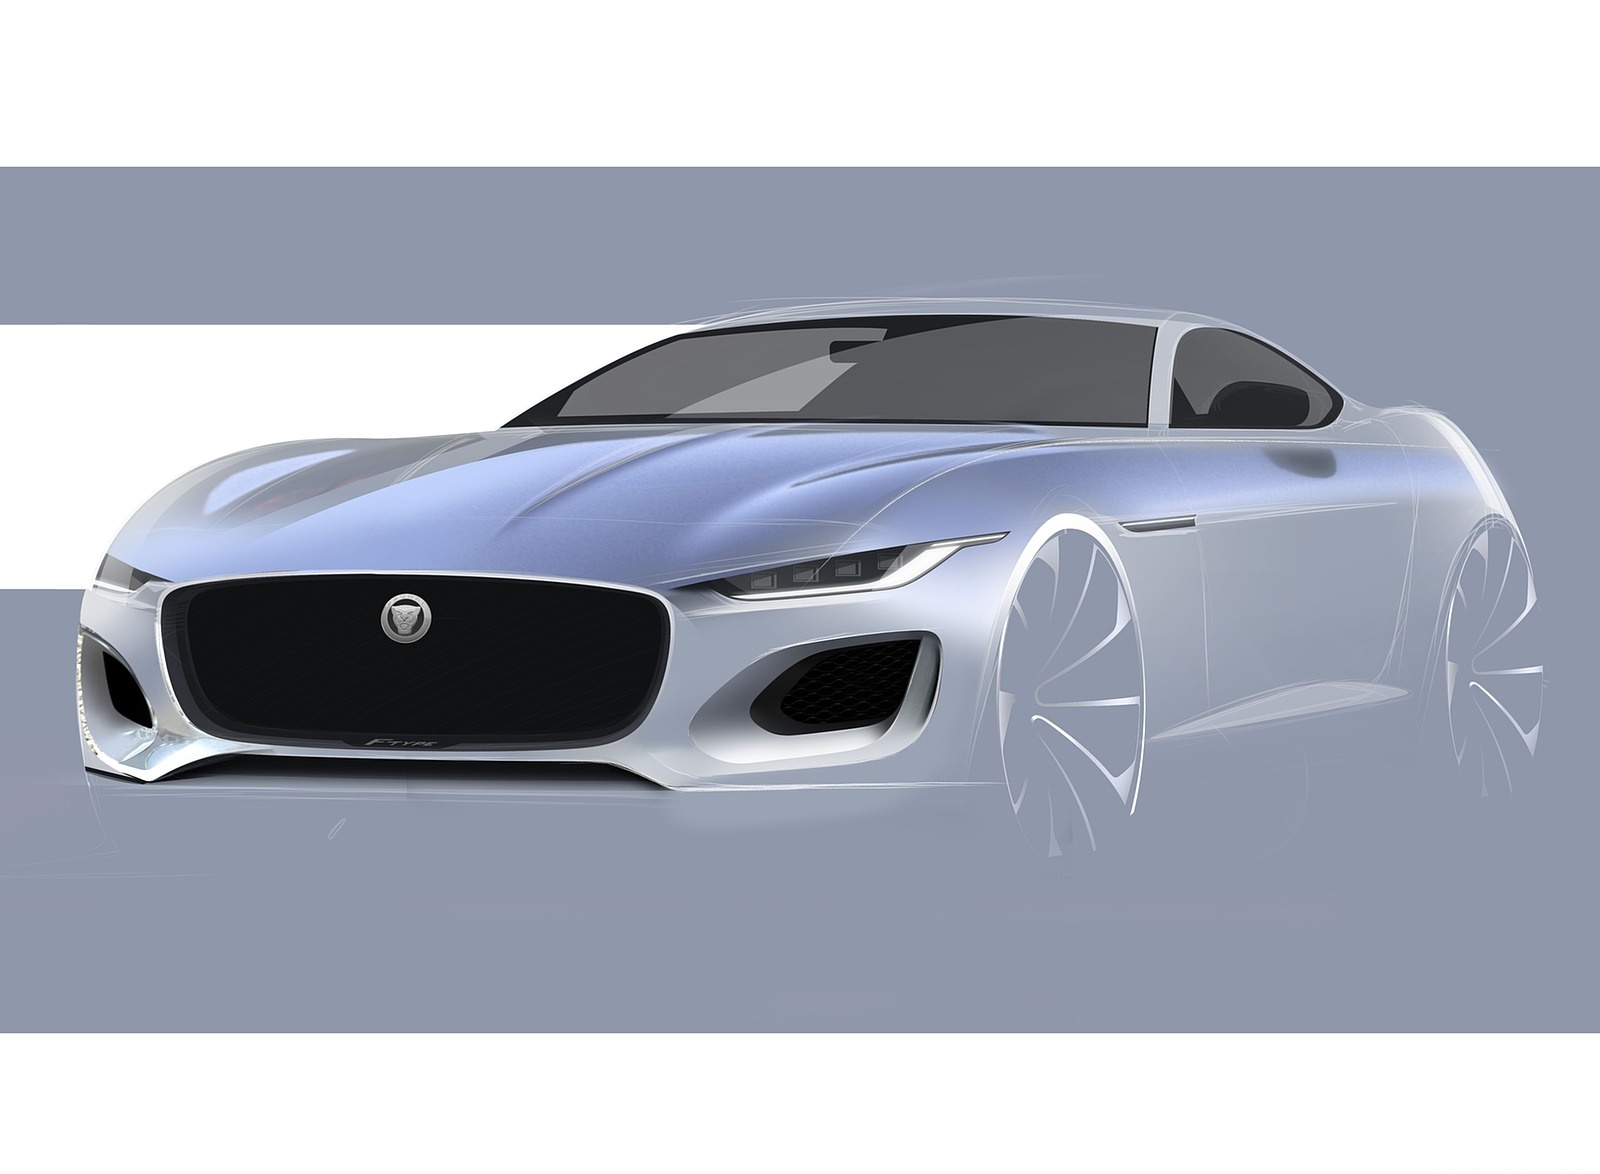 2021 Jaguar F-Type P300 Design Sketch Wallpapers #26 of 28